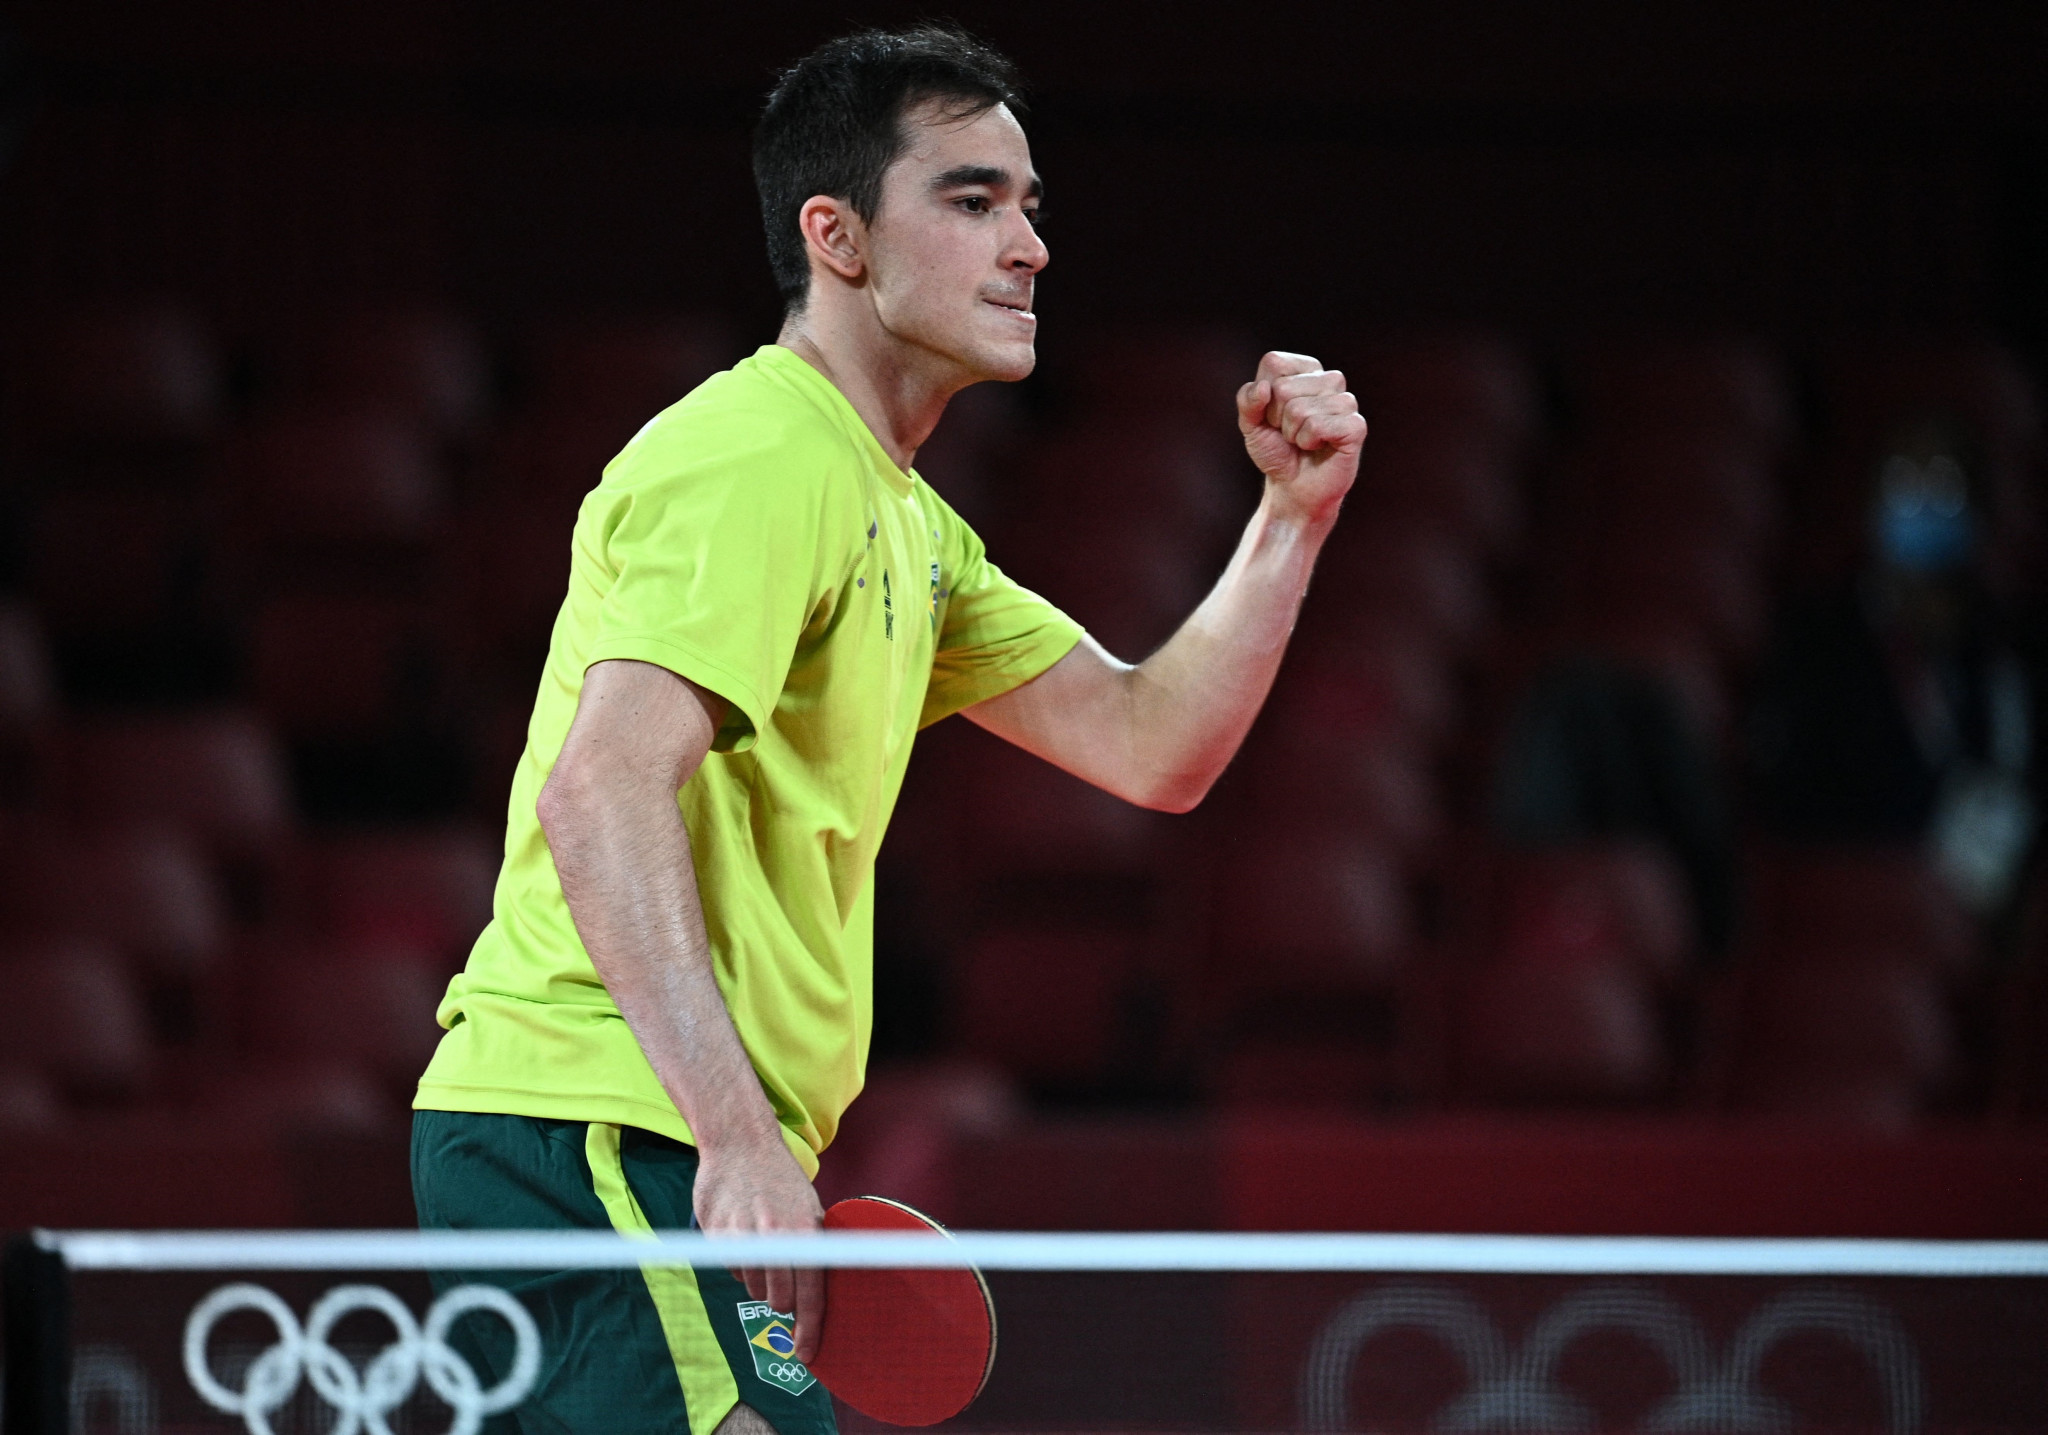 Hugo Calderano dug deep to overcome Darko Jorgić in the men's singles final in Doha ©Getty Images